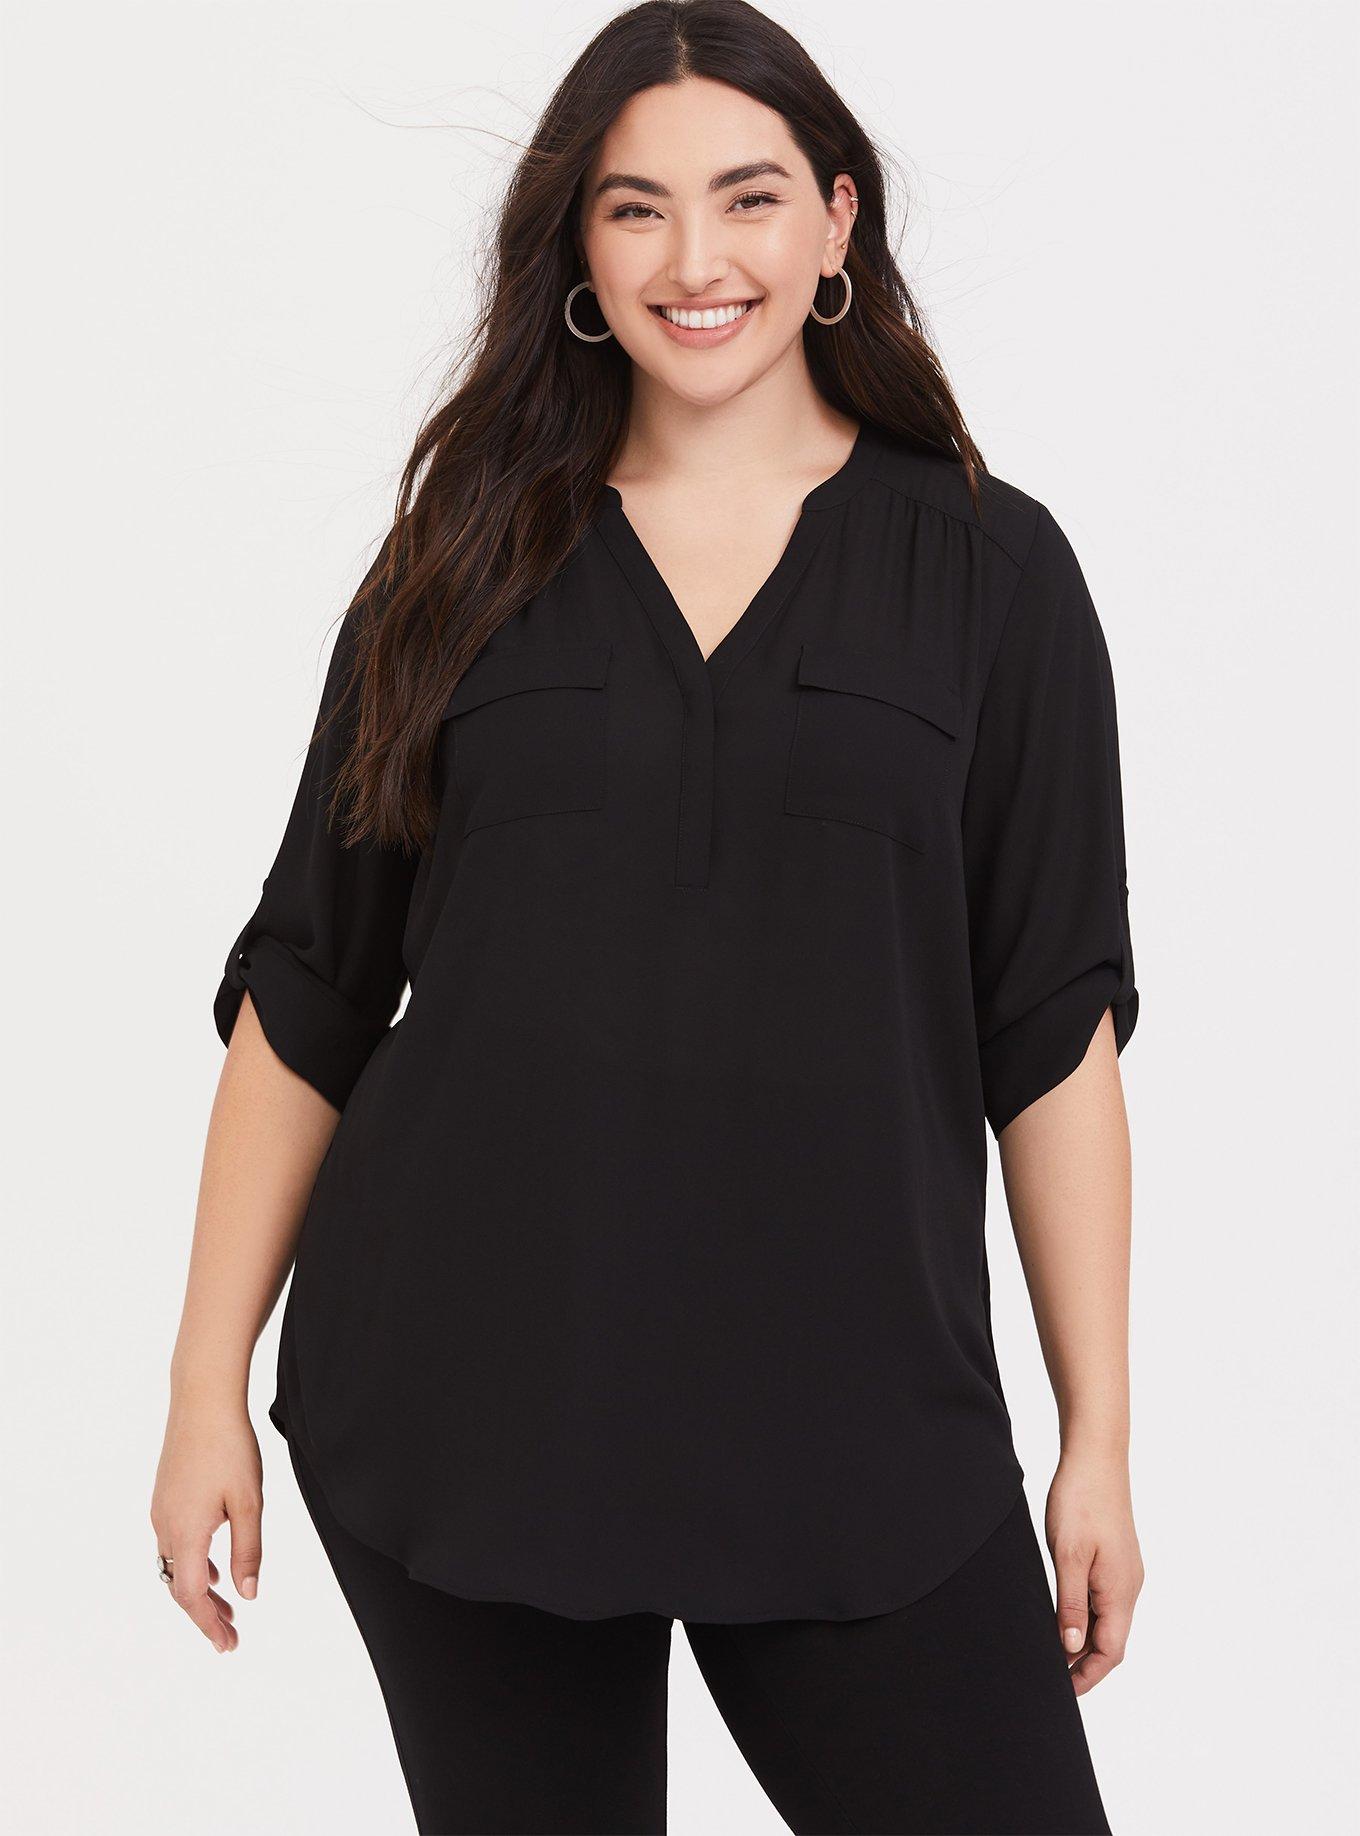 gbyLJF Cardigan for Women Plus Size 3/4 Sleeve Print Shirt Tops